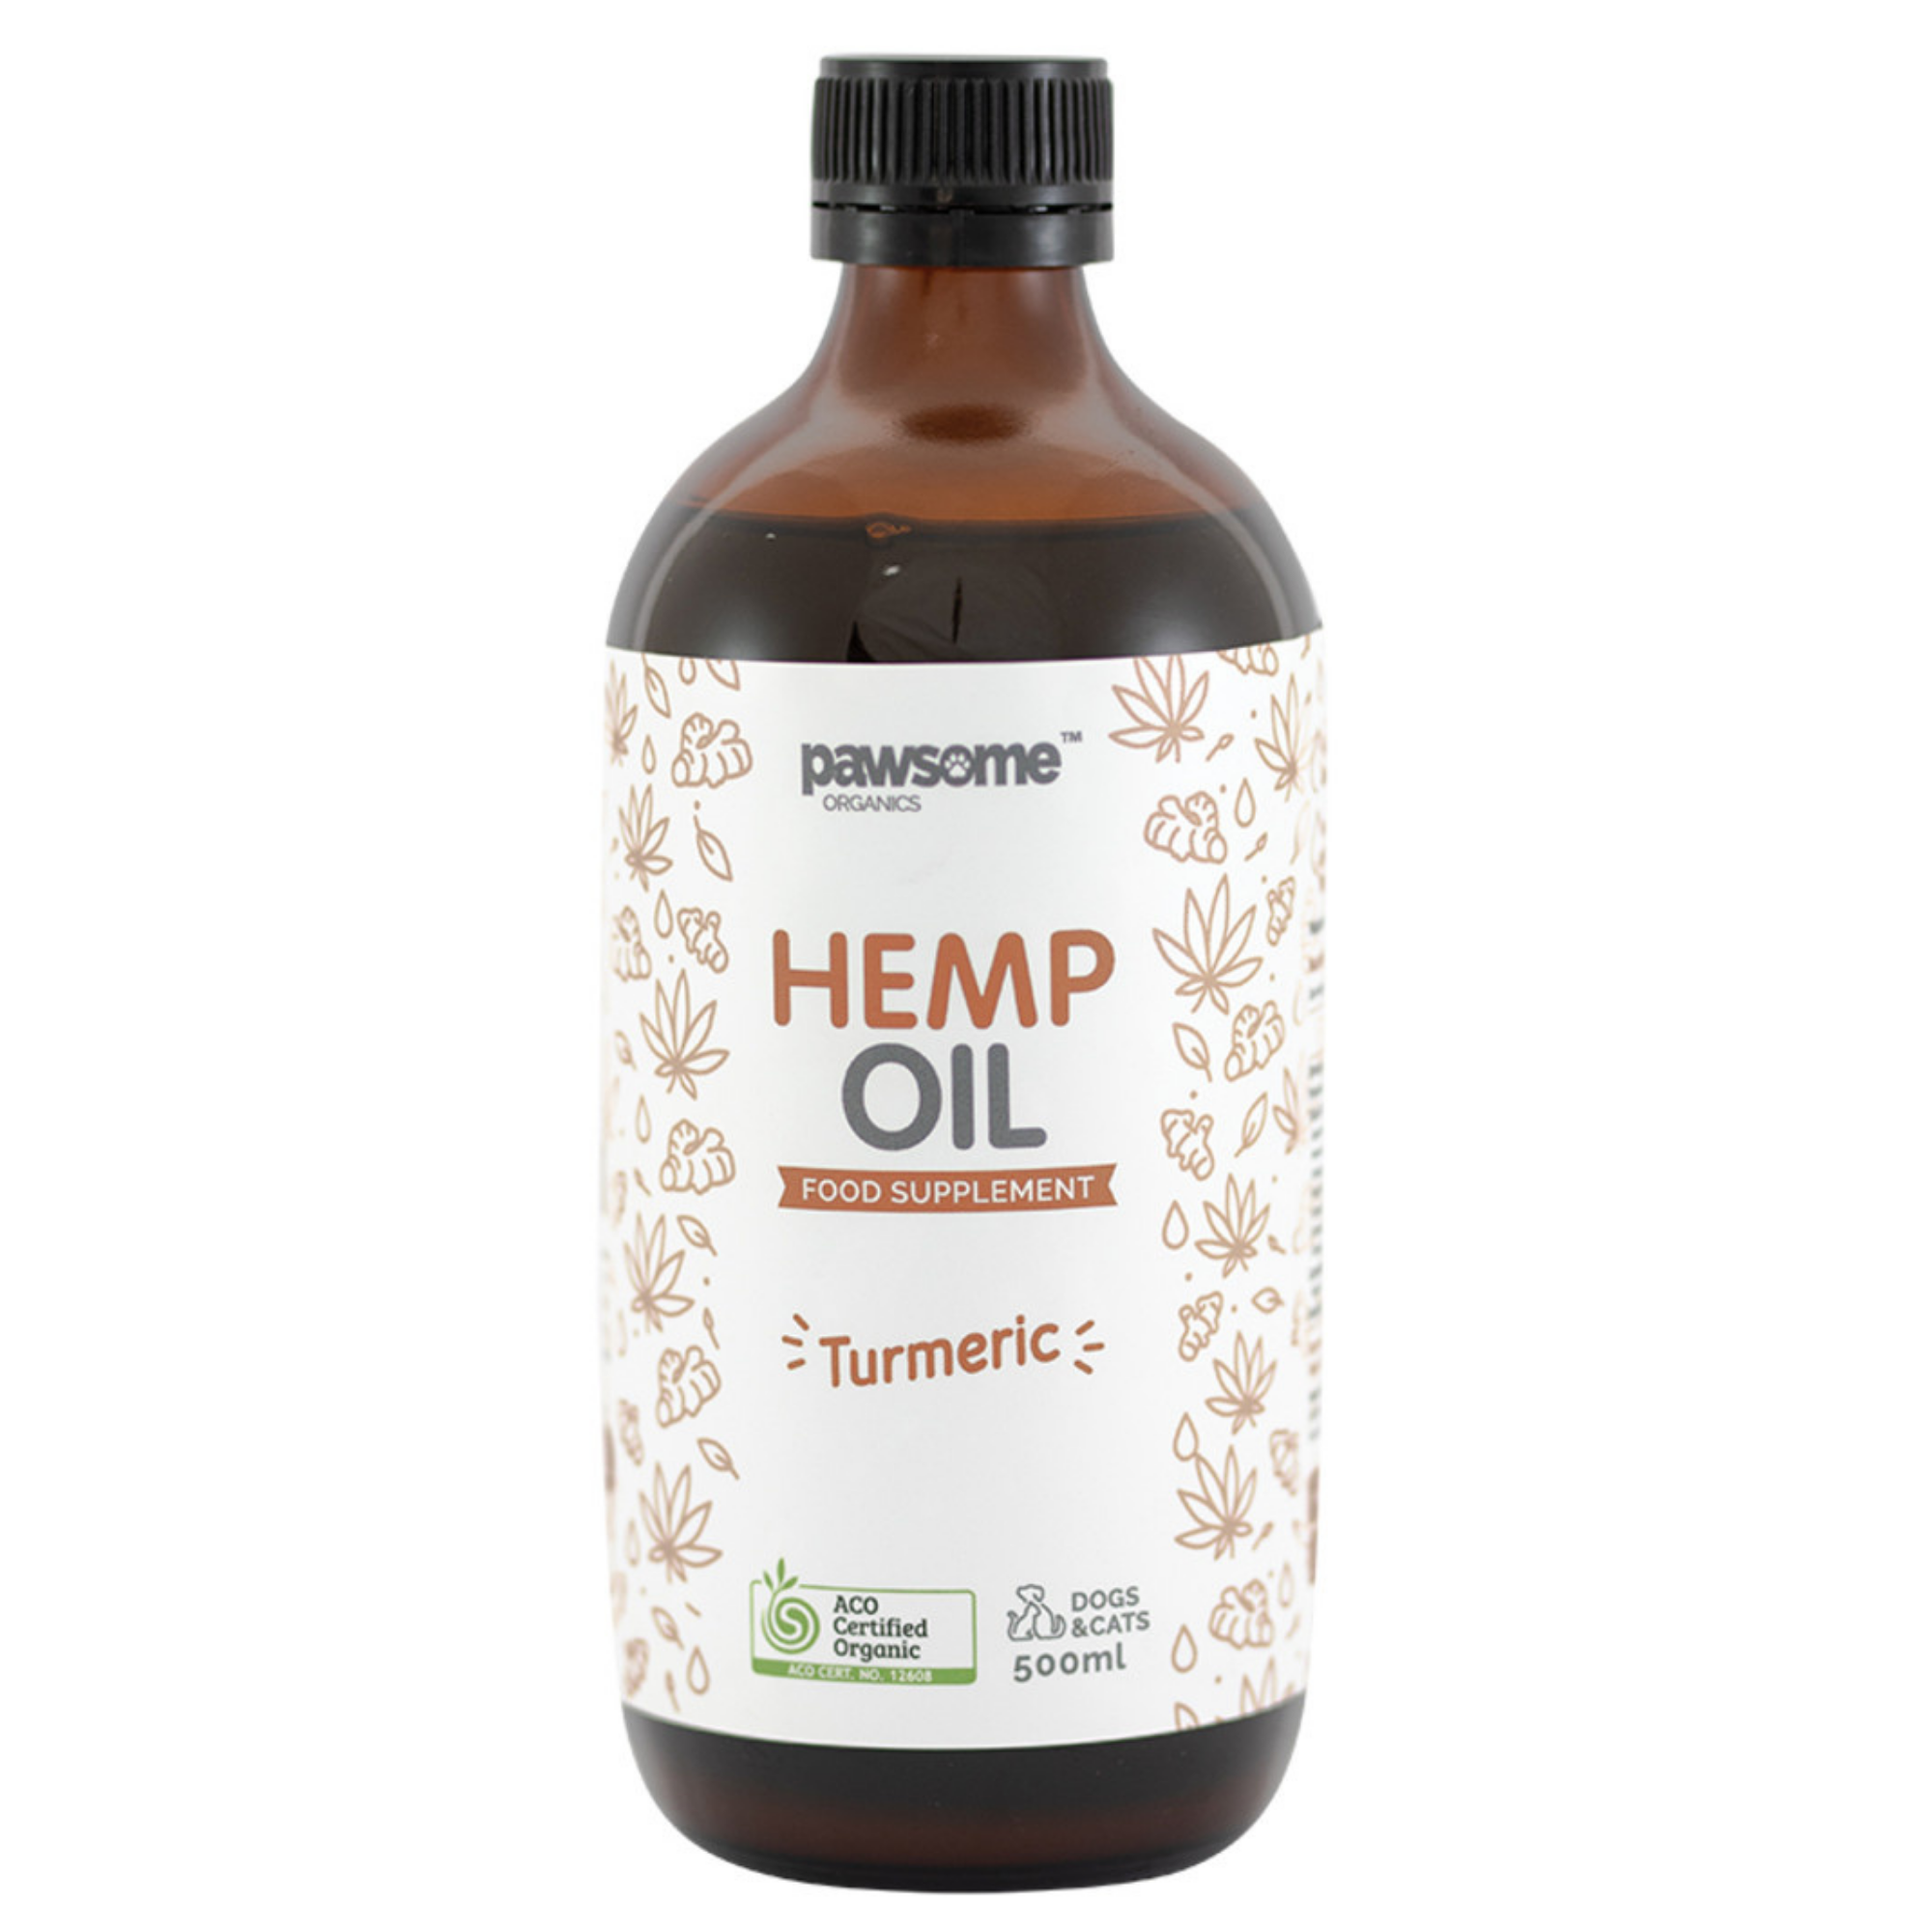 Pawsome Organic Hemp Oil and Turmeric